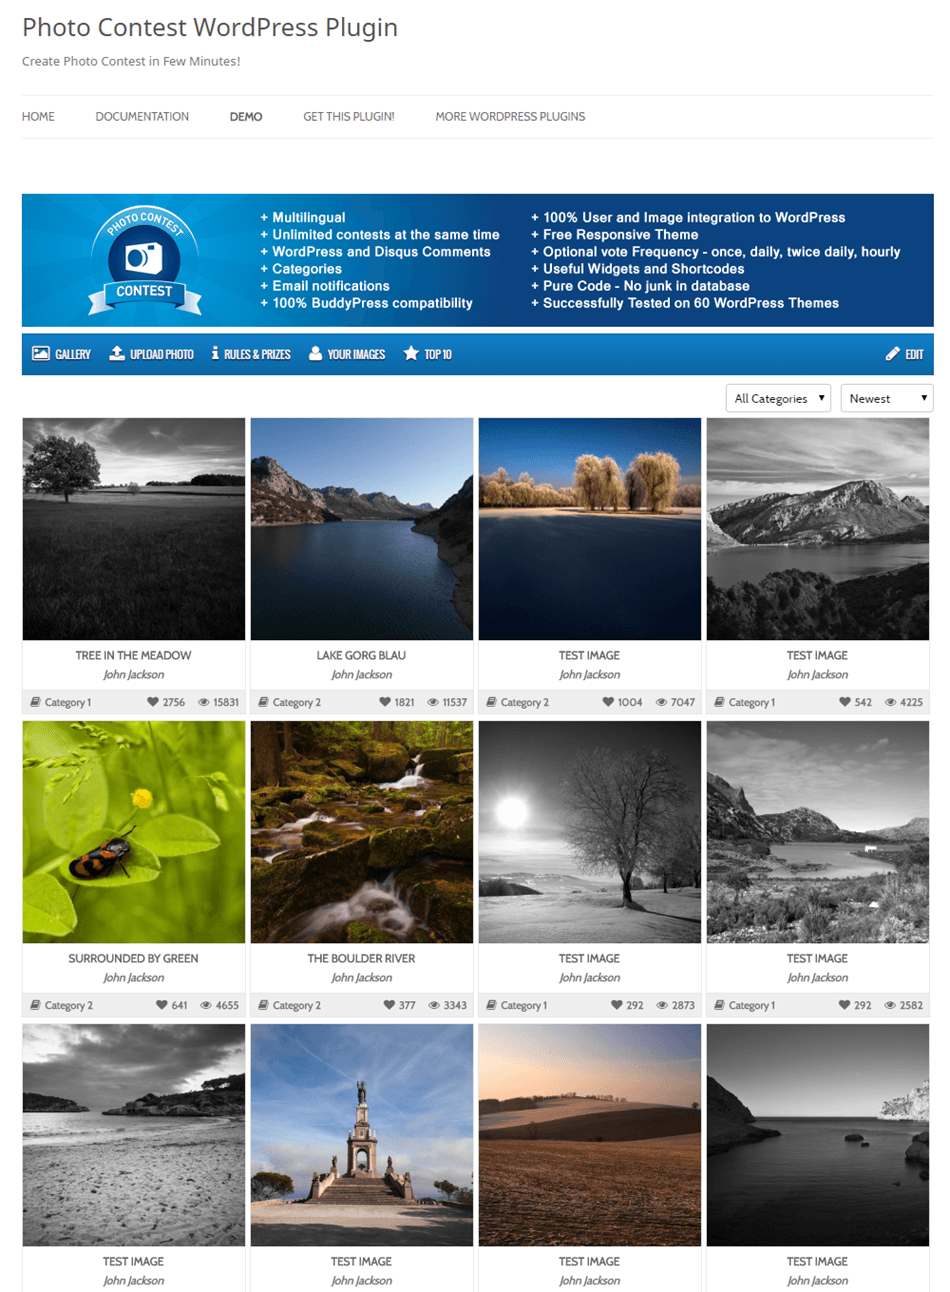 Photo Contest WordPress Plugin Demo Screenshot